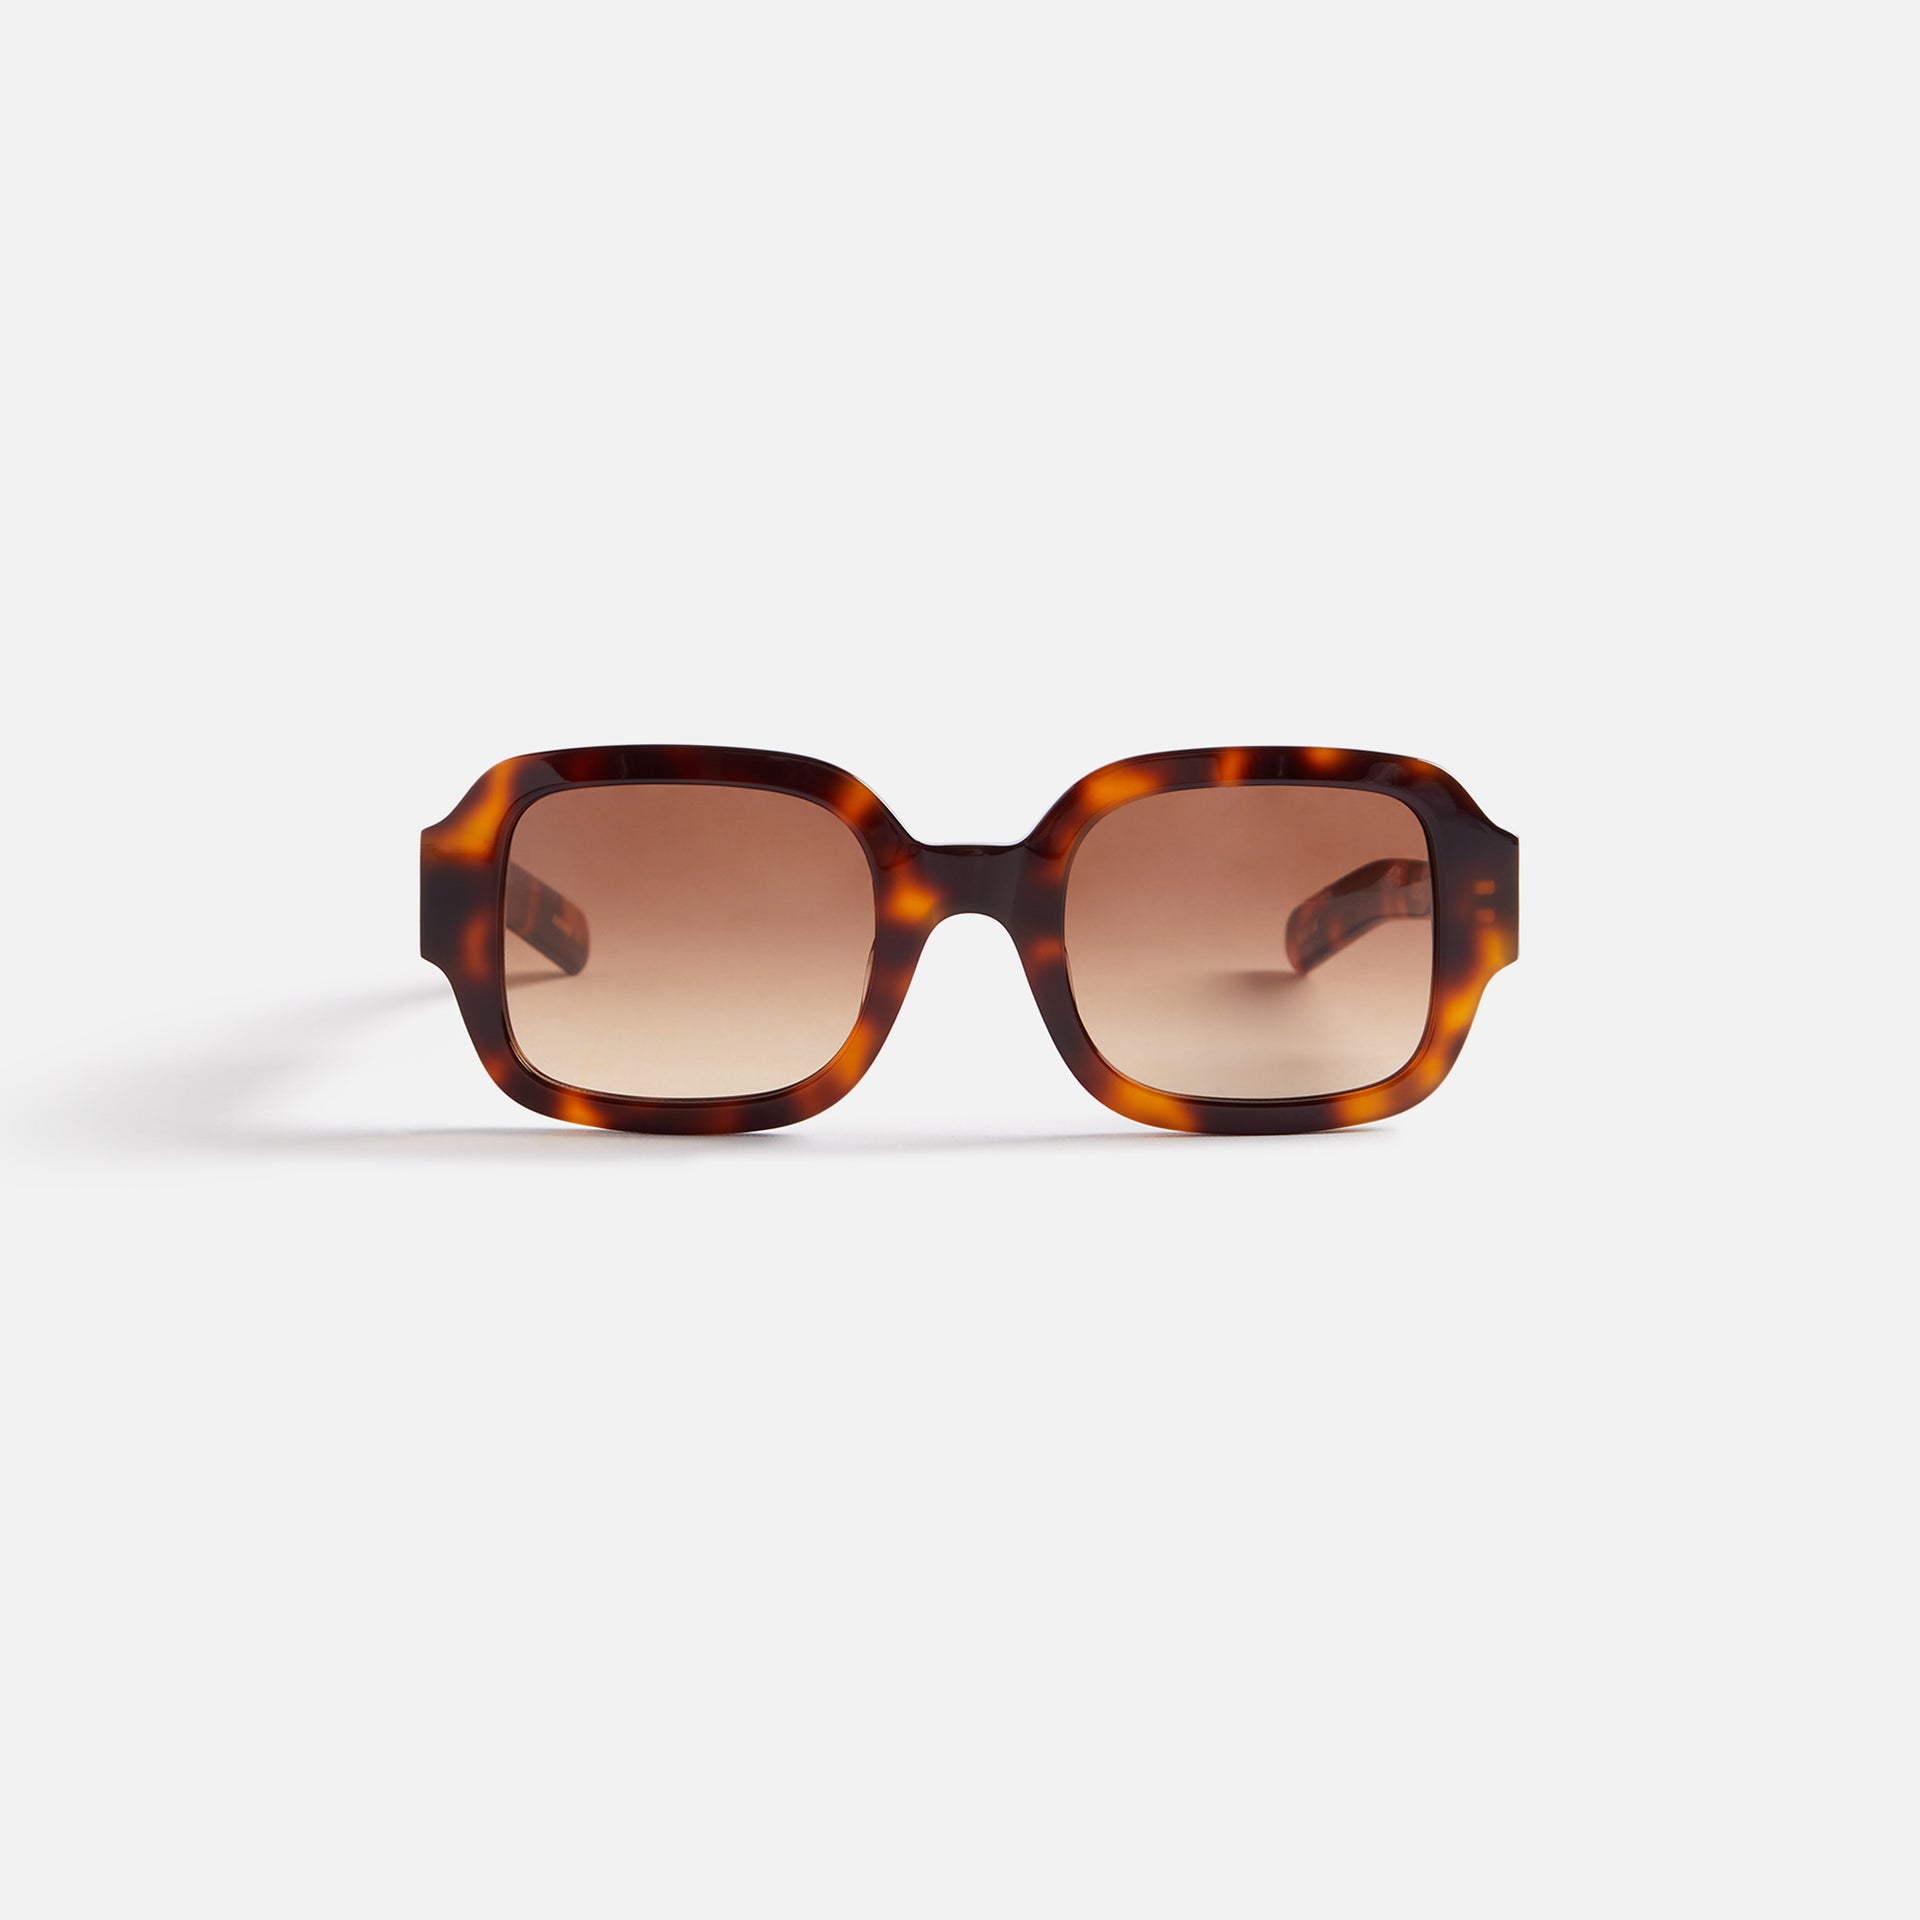 Flatlist Tishkoff Sunglasses - Tortoise / Brown Gradient Lens